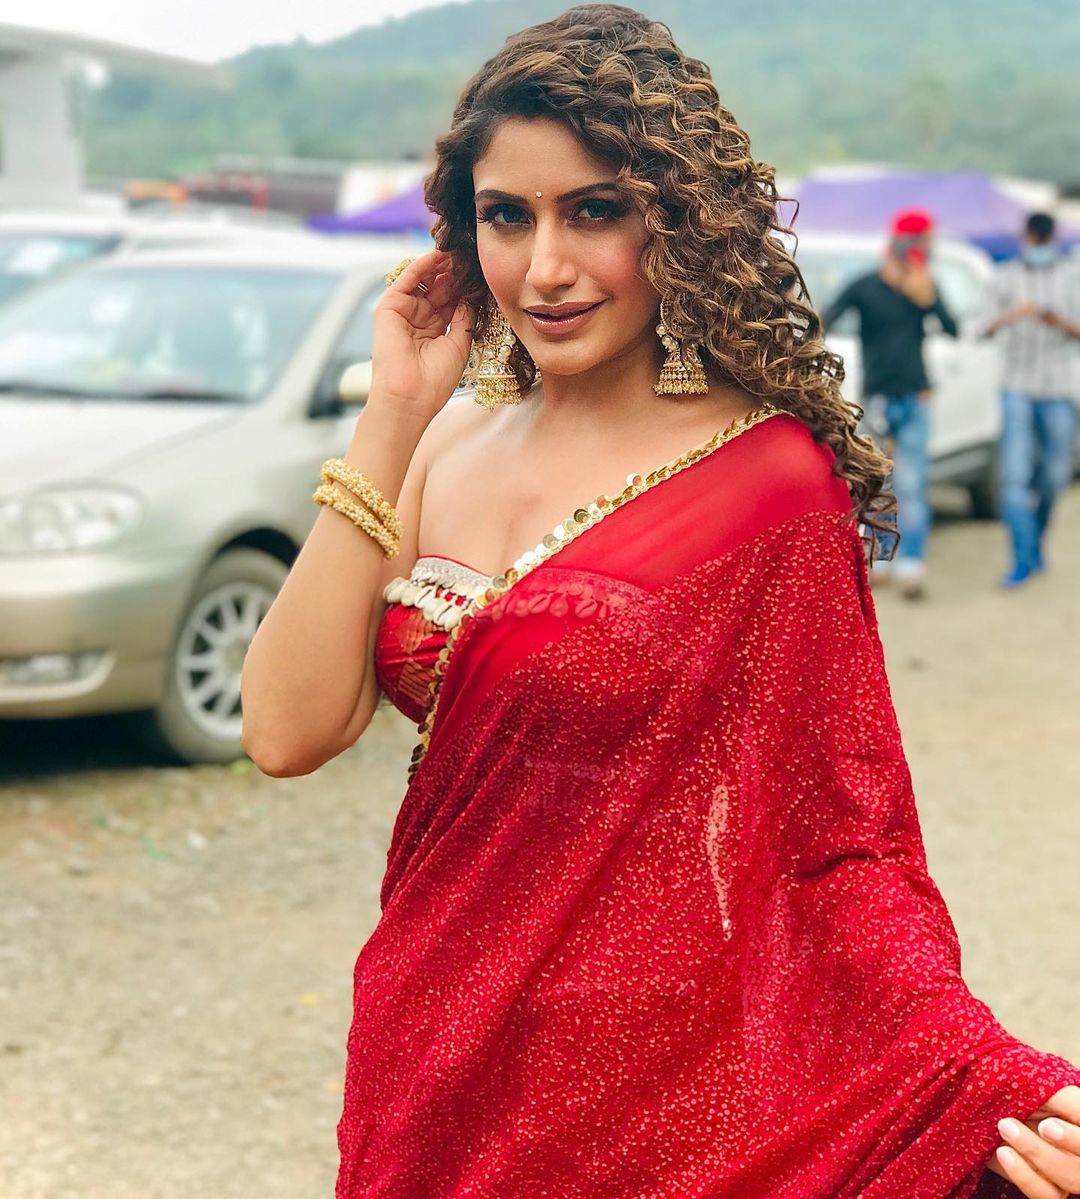 Red Hot: Surbhi Chandna’s latest sexy red saree avatar sets the internet on fire

#scfashionlookbook #scfashiondiaries #eventready  #naagin5 #banisharma #SurbhiChandna